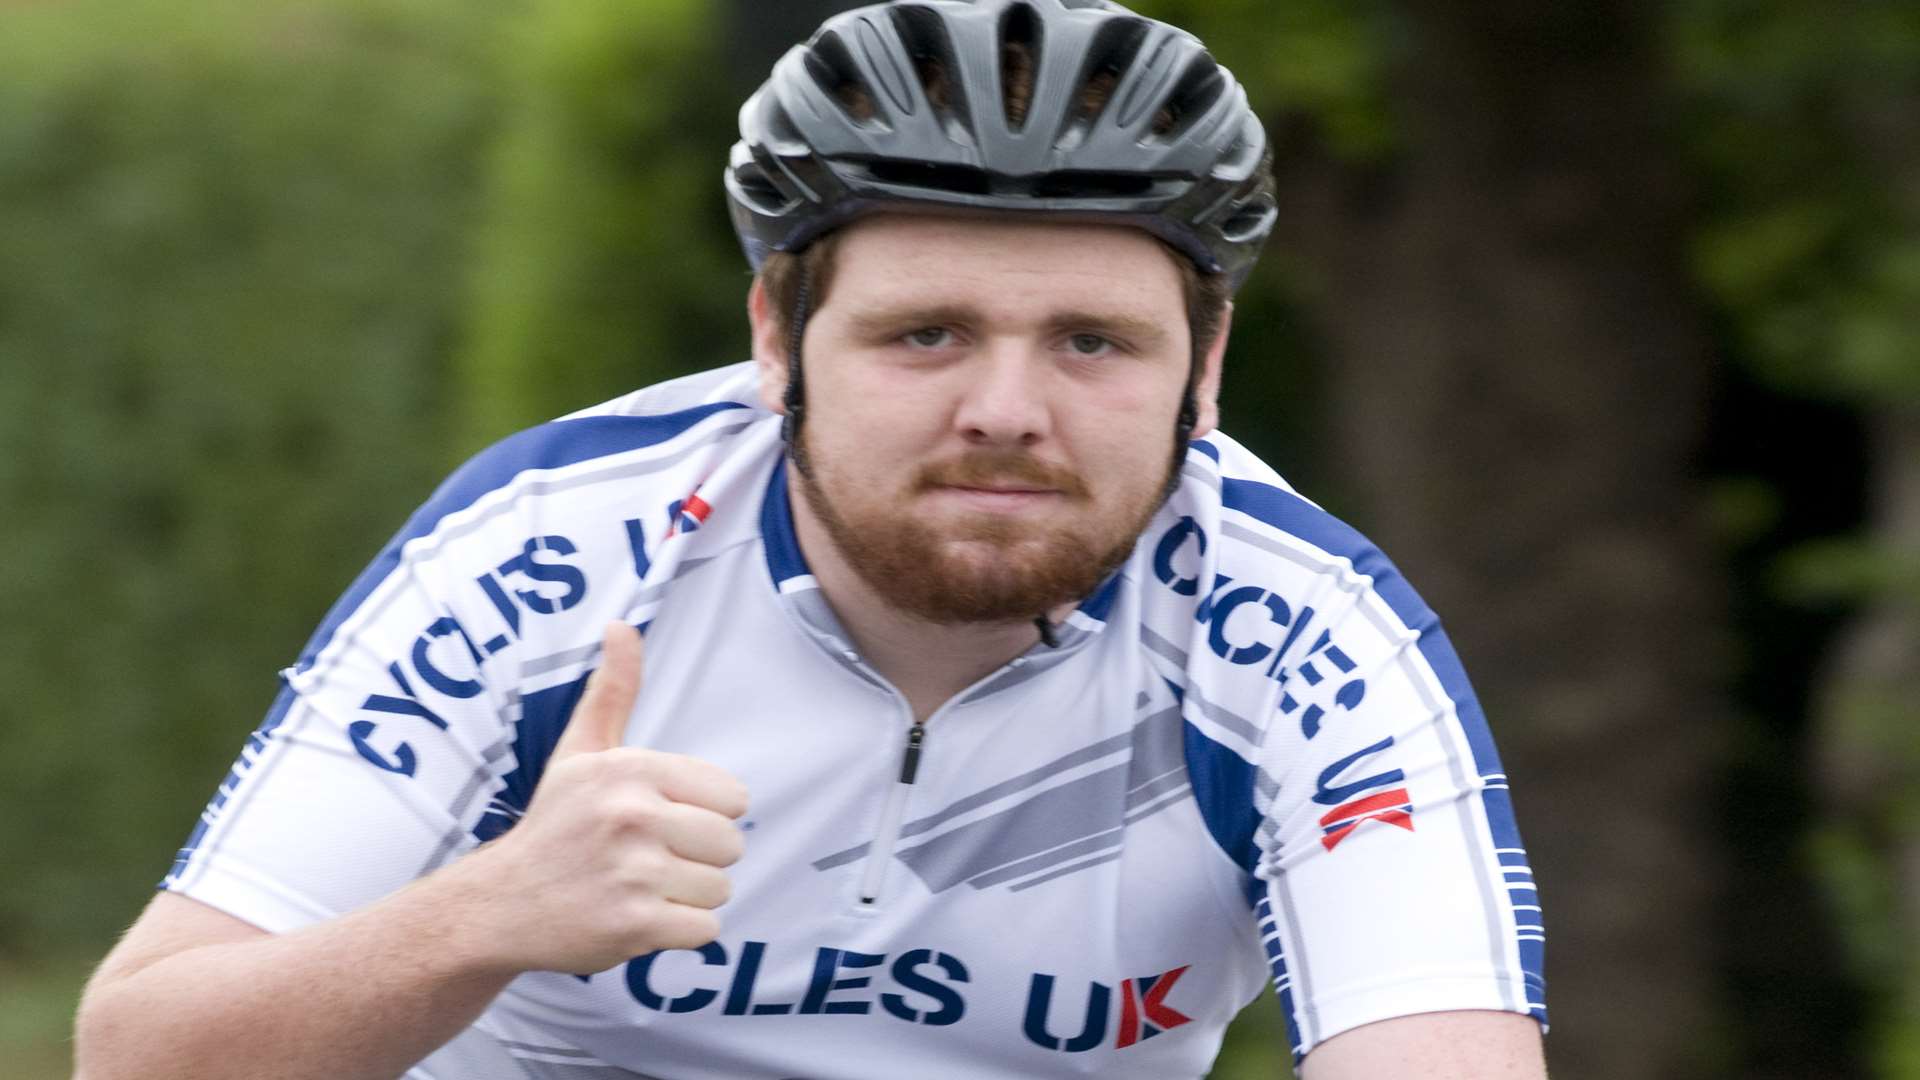 Eben Fletcher who's doing a charity bike ride